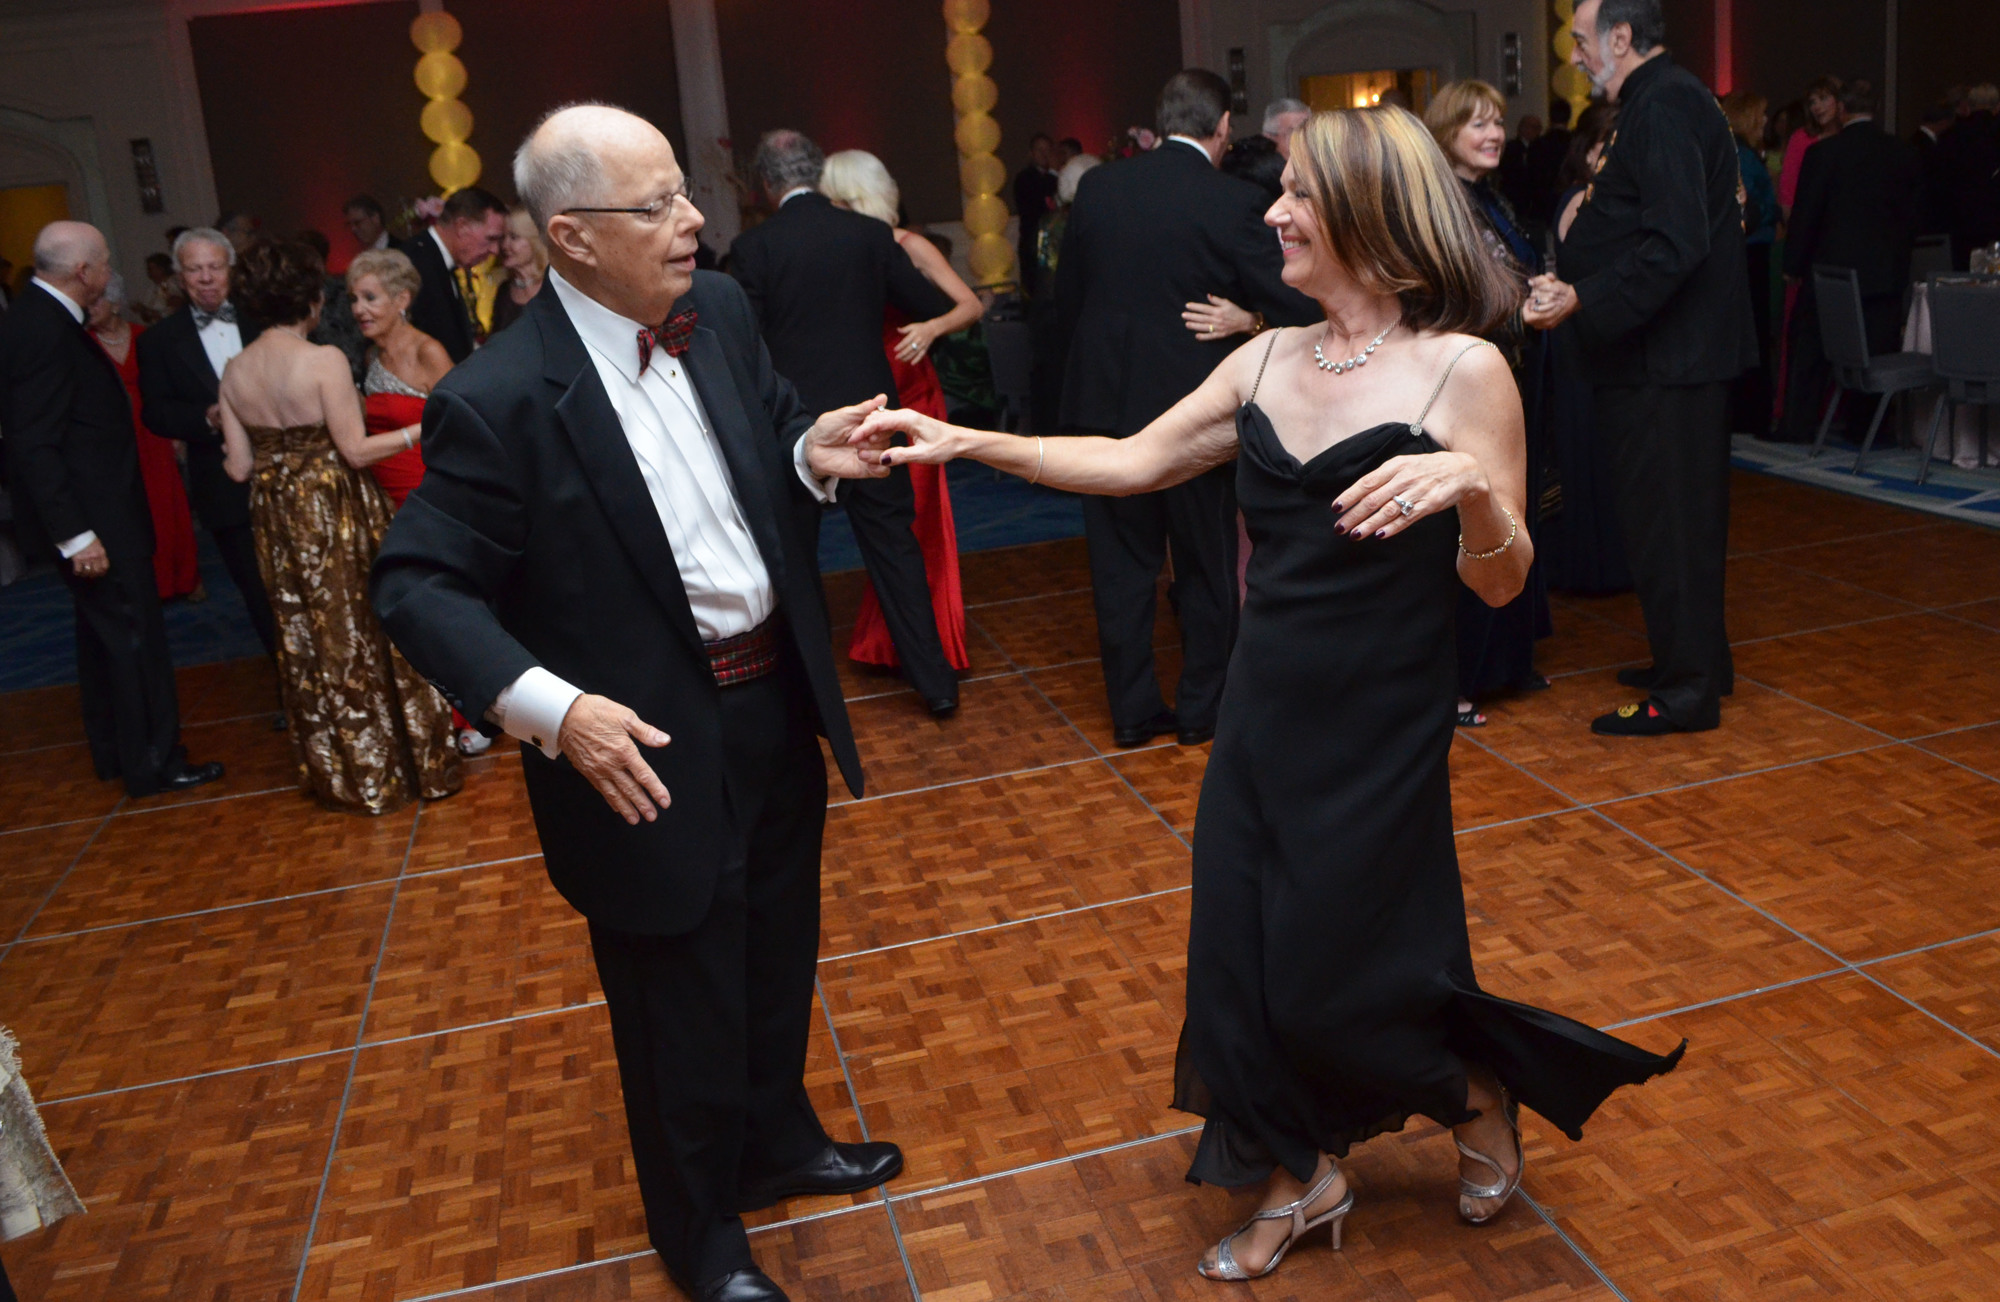 Dr. Ed Williams dances with Nancy Hewett at The Opera Gala on Jan. 21, 2017. Photo by Niki Kottmann